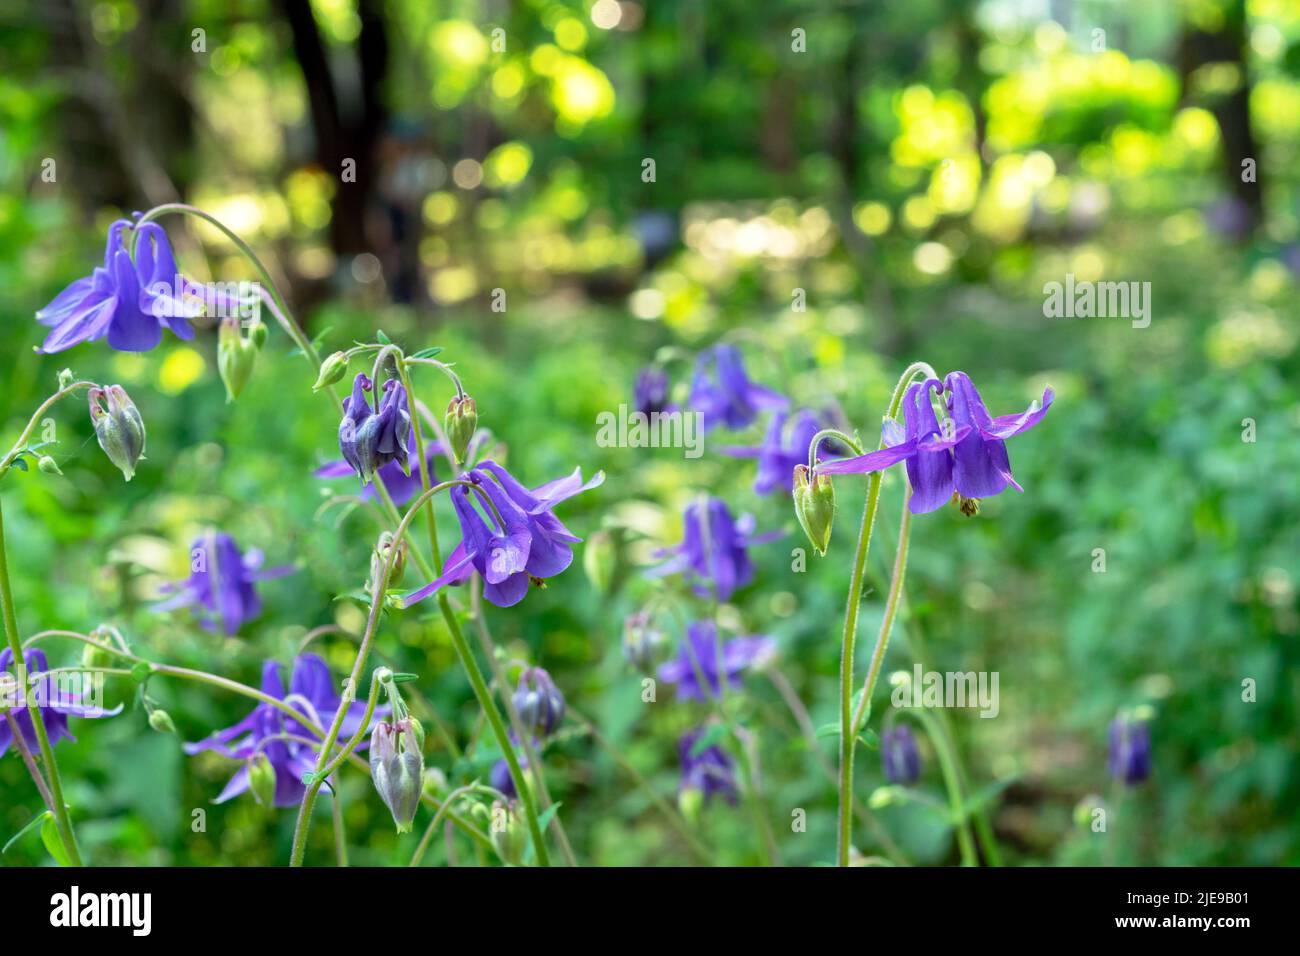 Purple flowers of Aquilegia vulgaris or European columbine bloom in the summer garden. Stock Photo